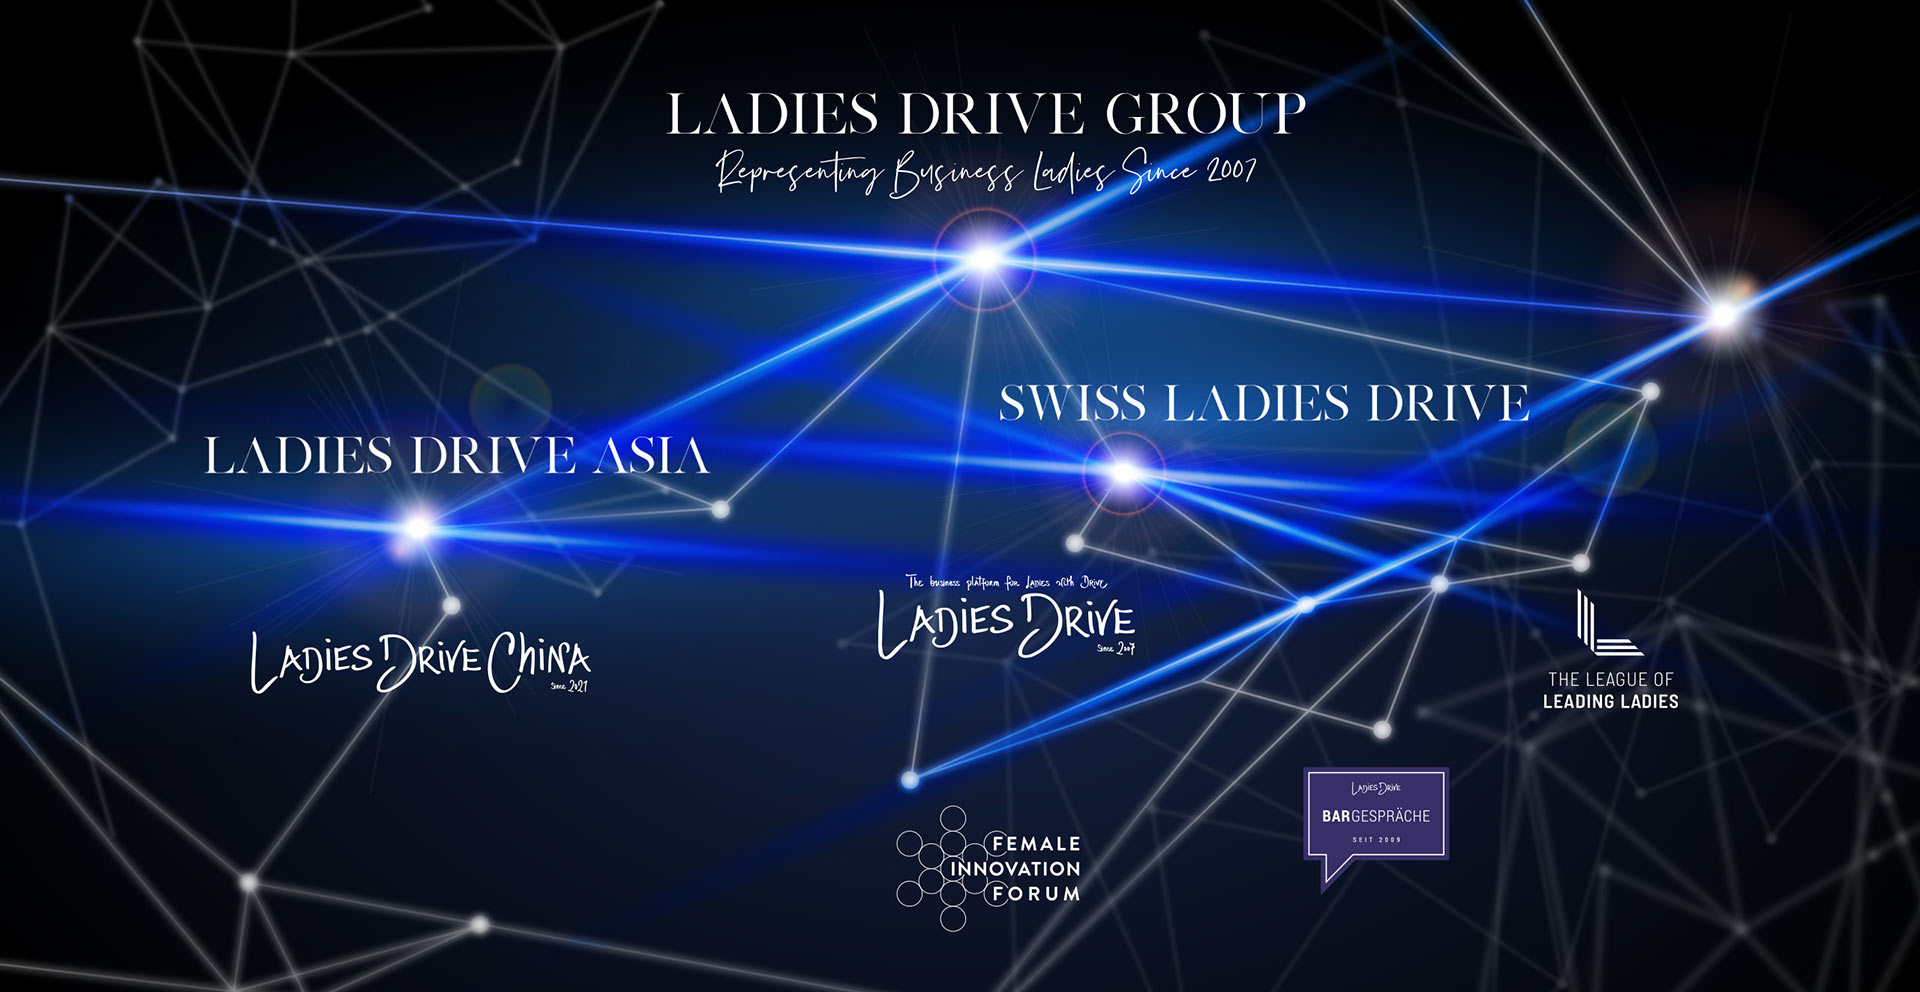 Swiss Ladies Drive Group